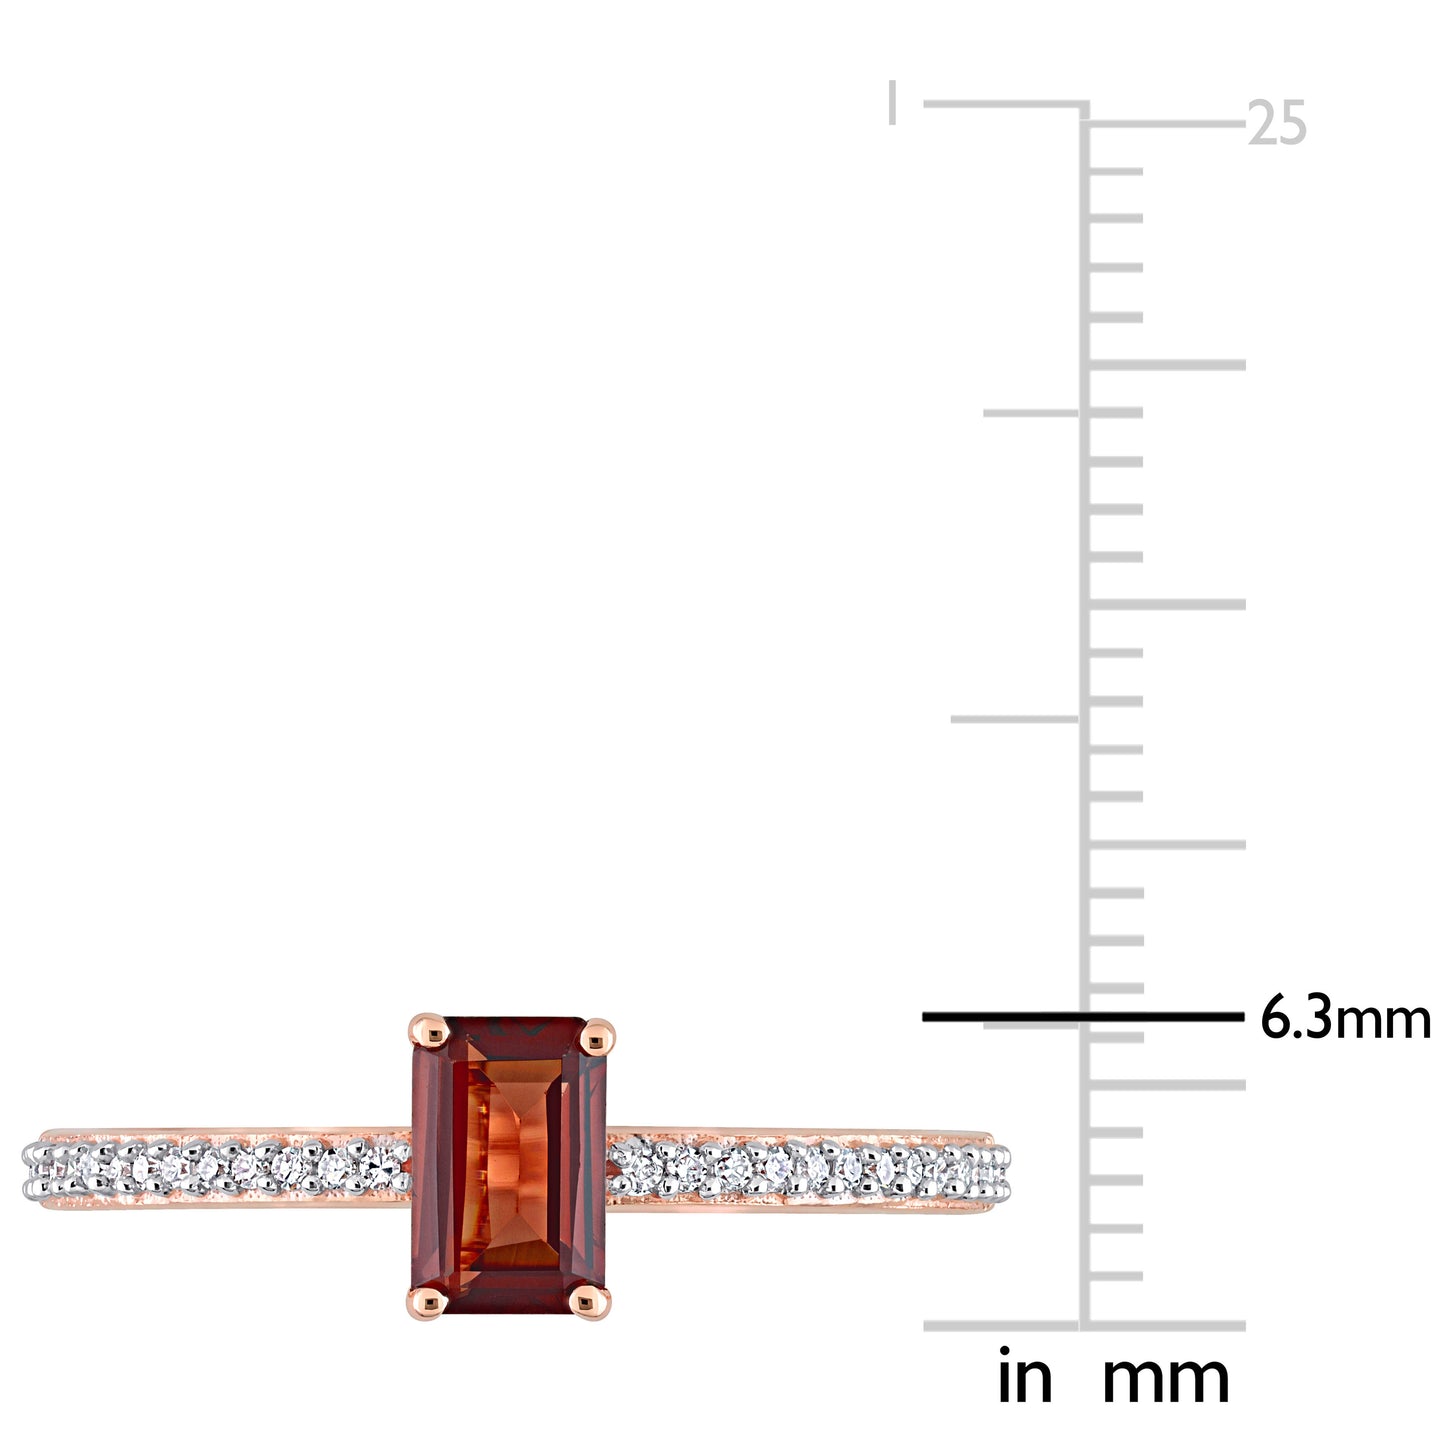 Garnet & Diamond Emerald Cut Ring in 10k Rose Gold